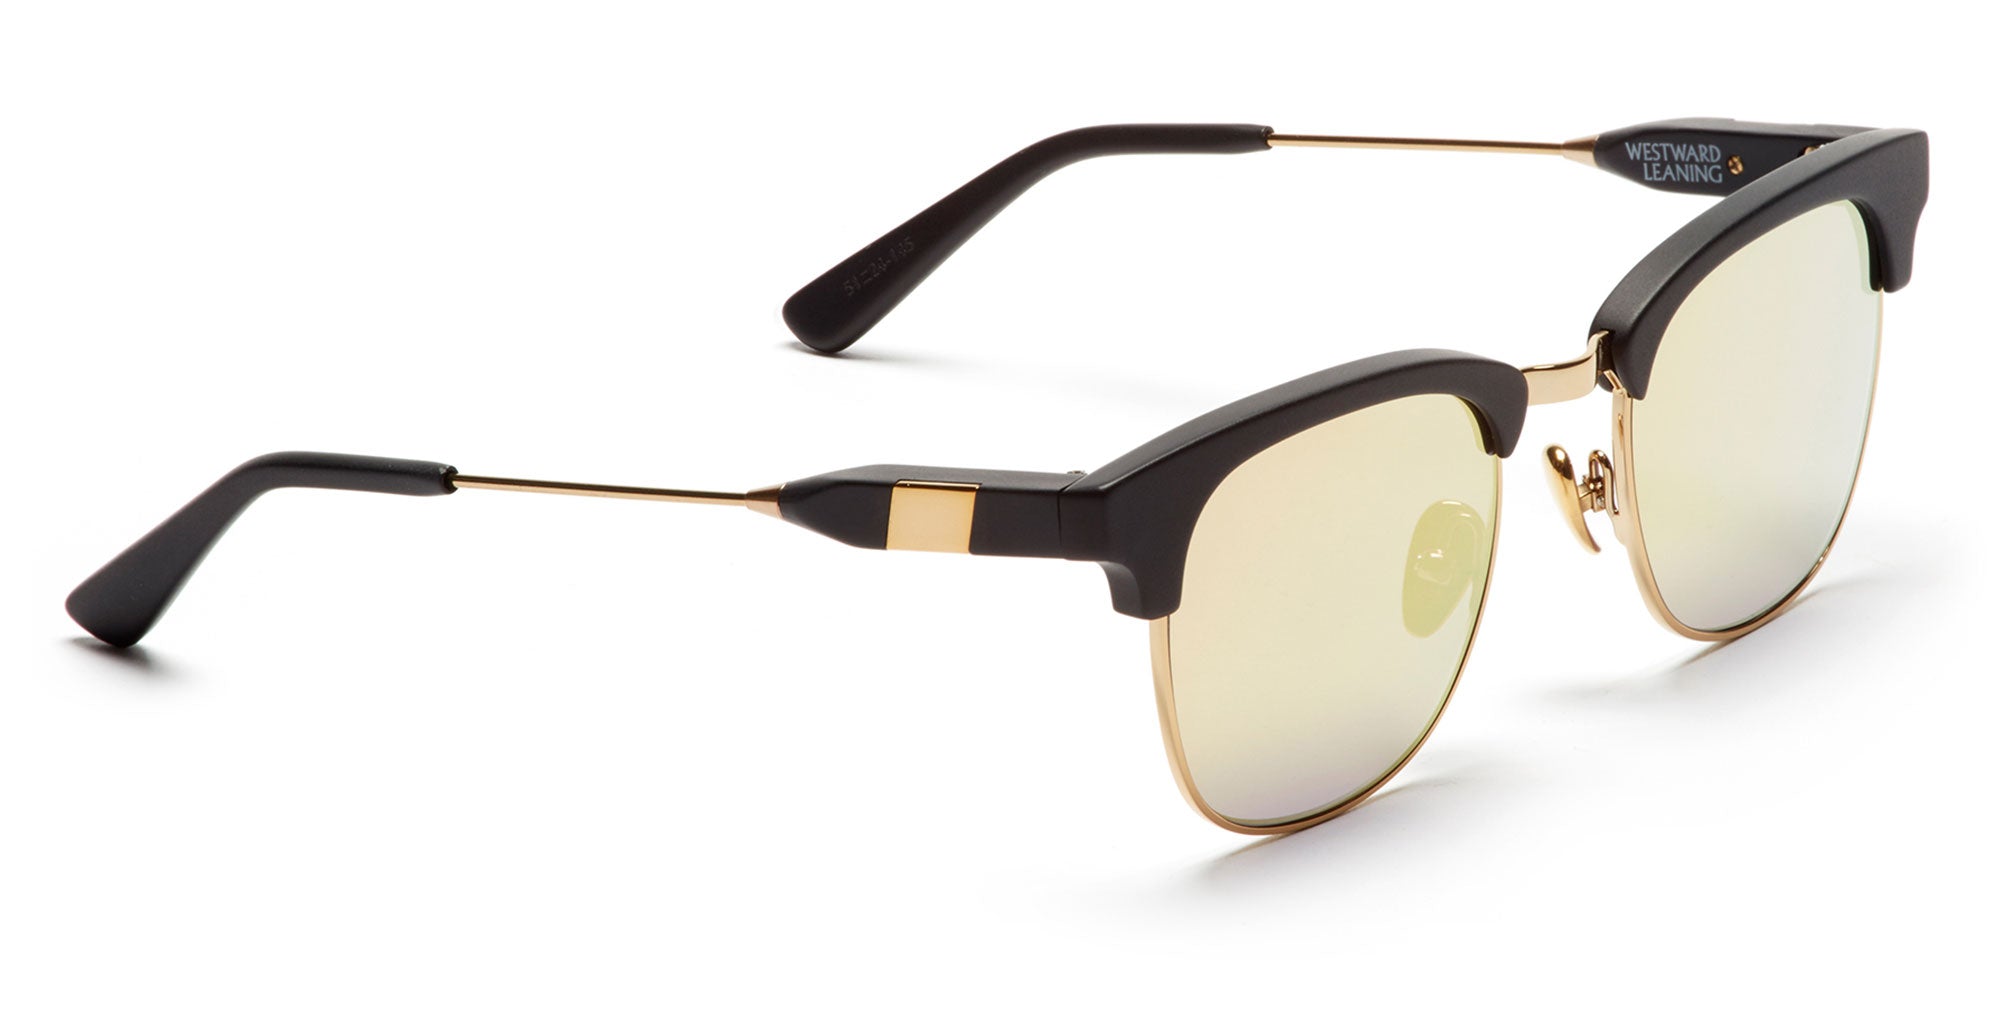 Vanguard 19|Handmade Sunglasses by Westward Leaning